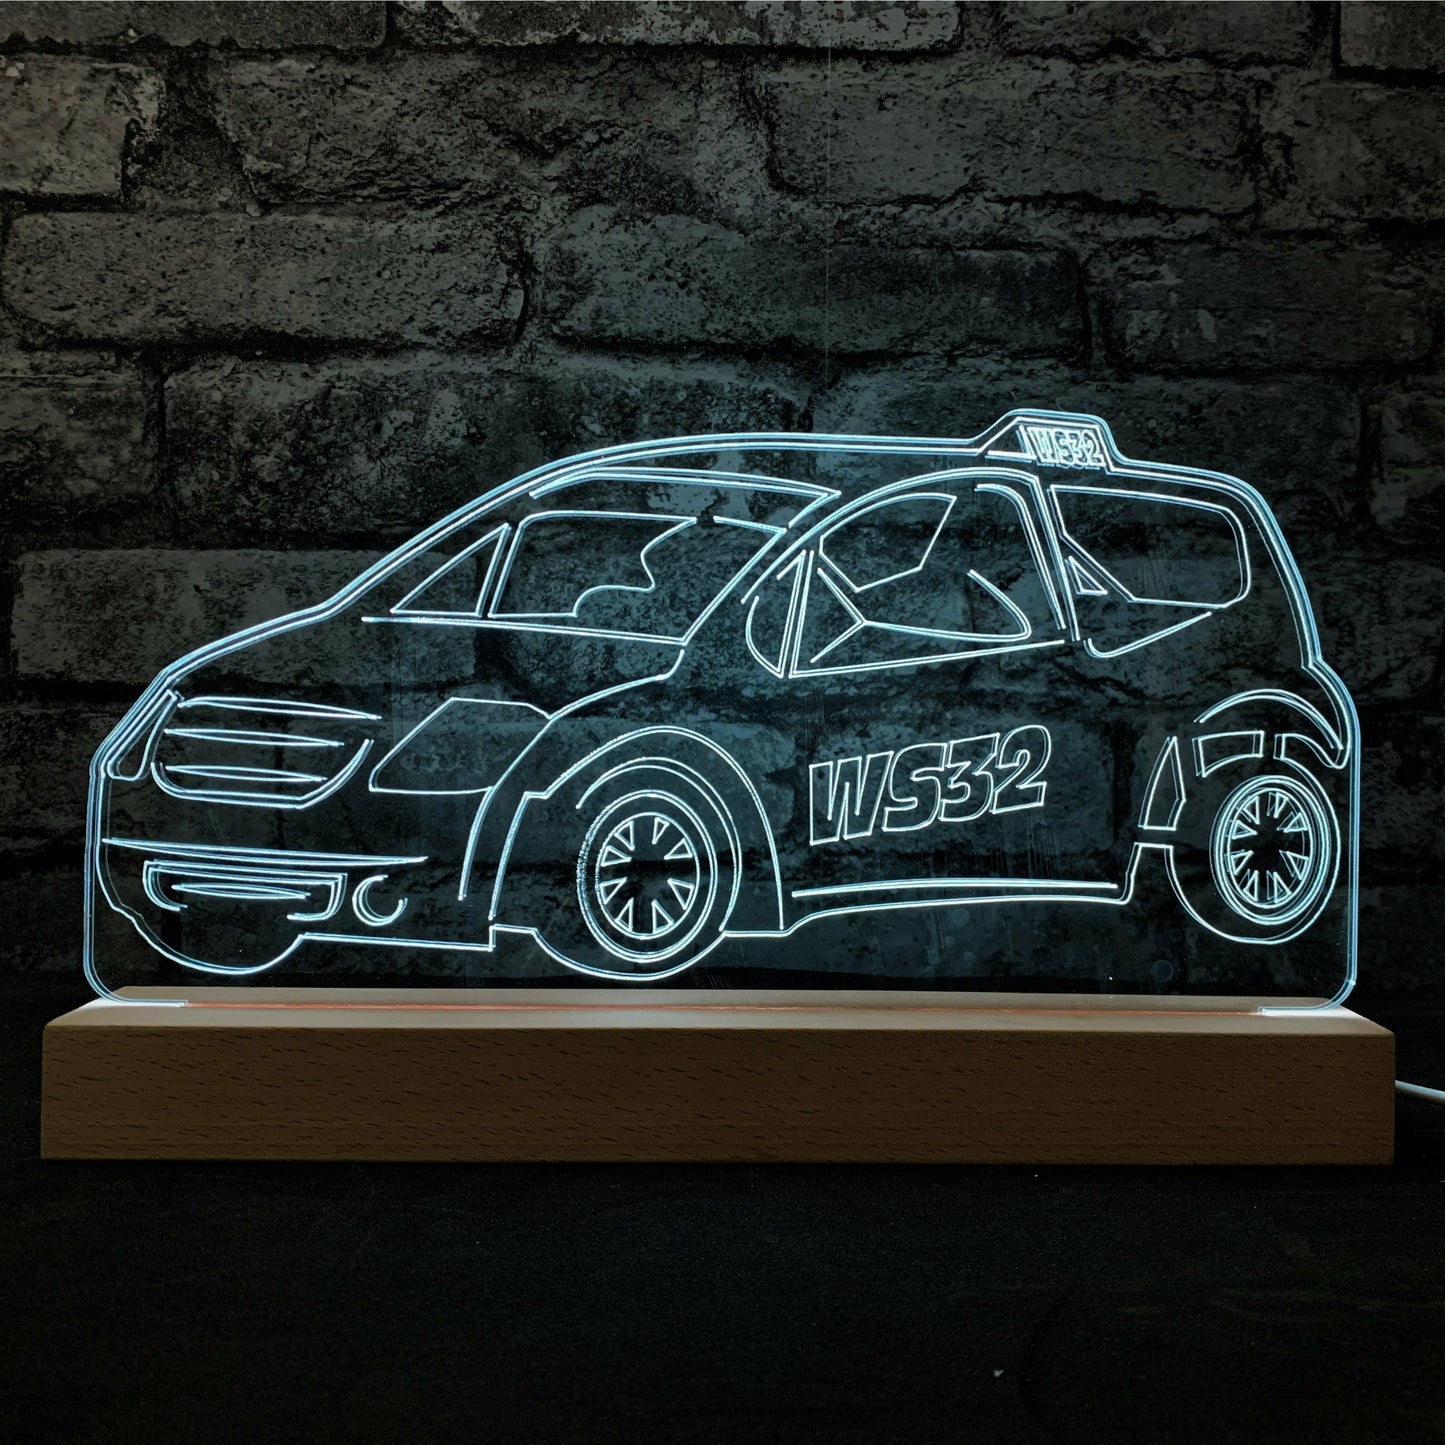 Class 6 C5 - Autograss Night Light - Night Lights & Ambient Lighting - Stock Car & Banger Toy Tracks